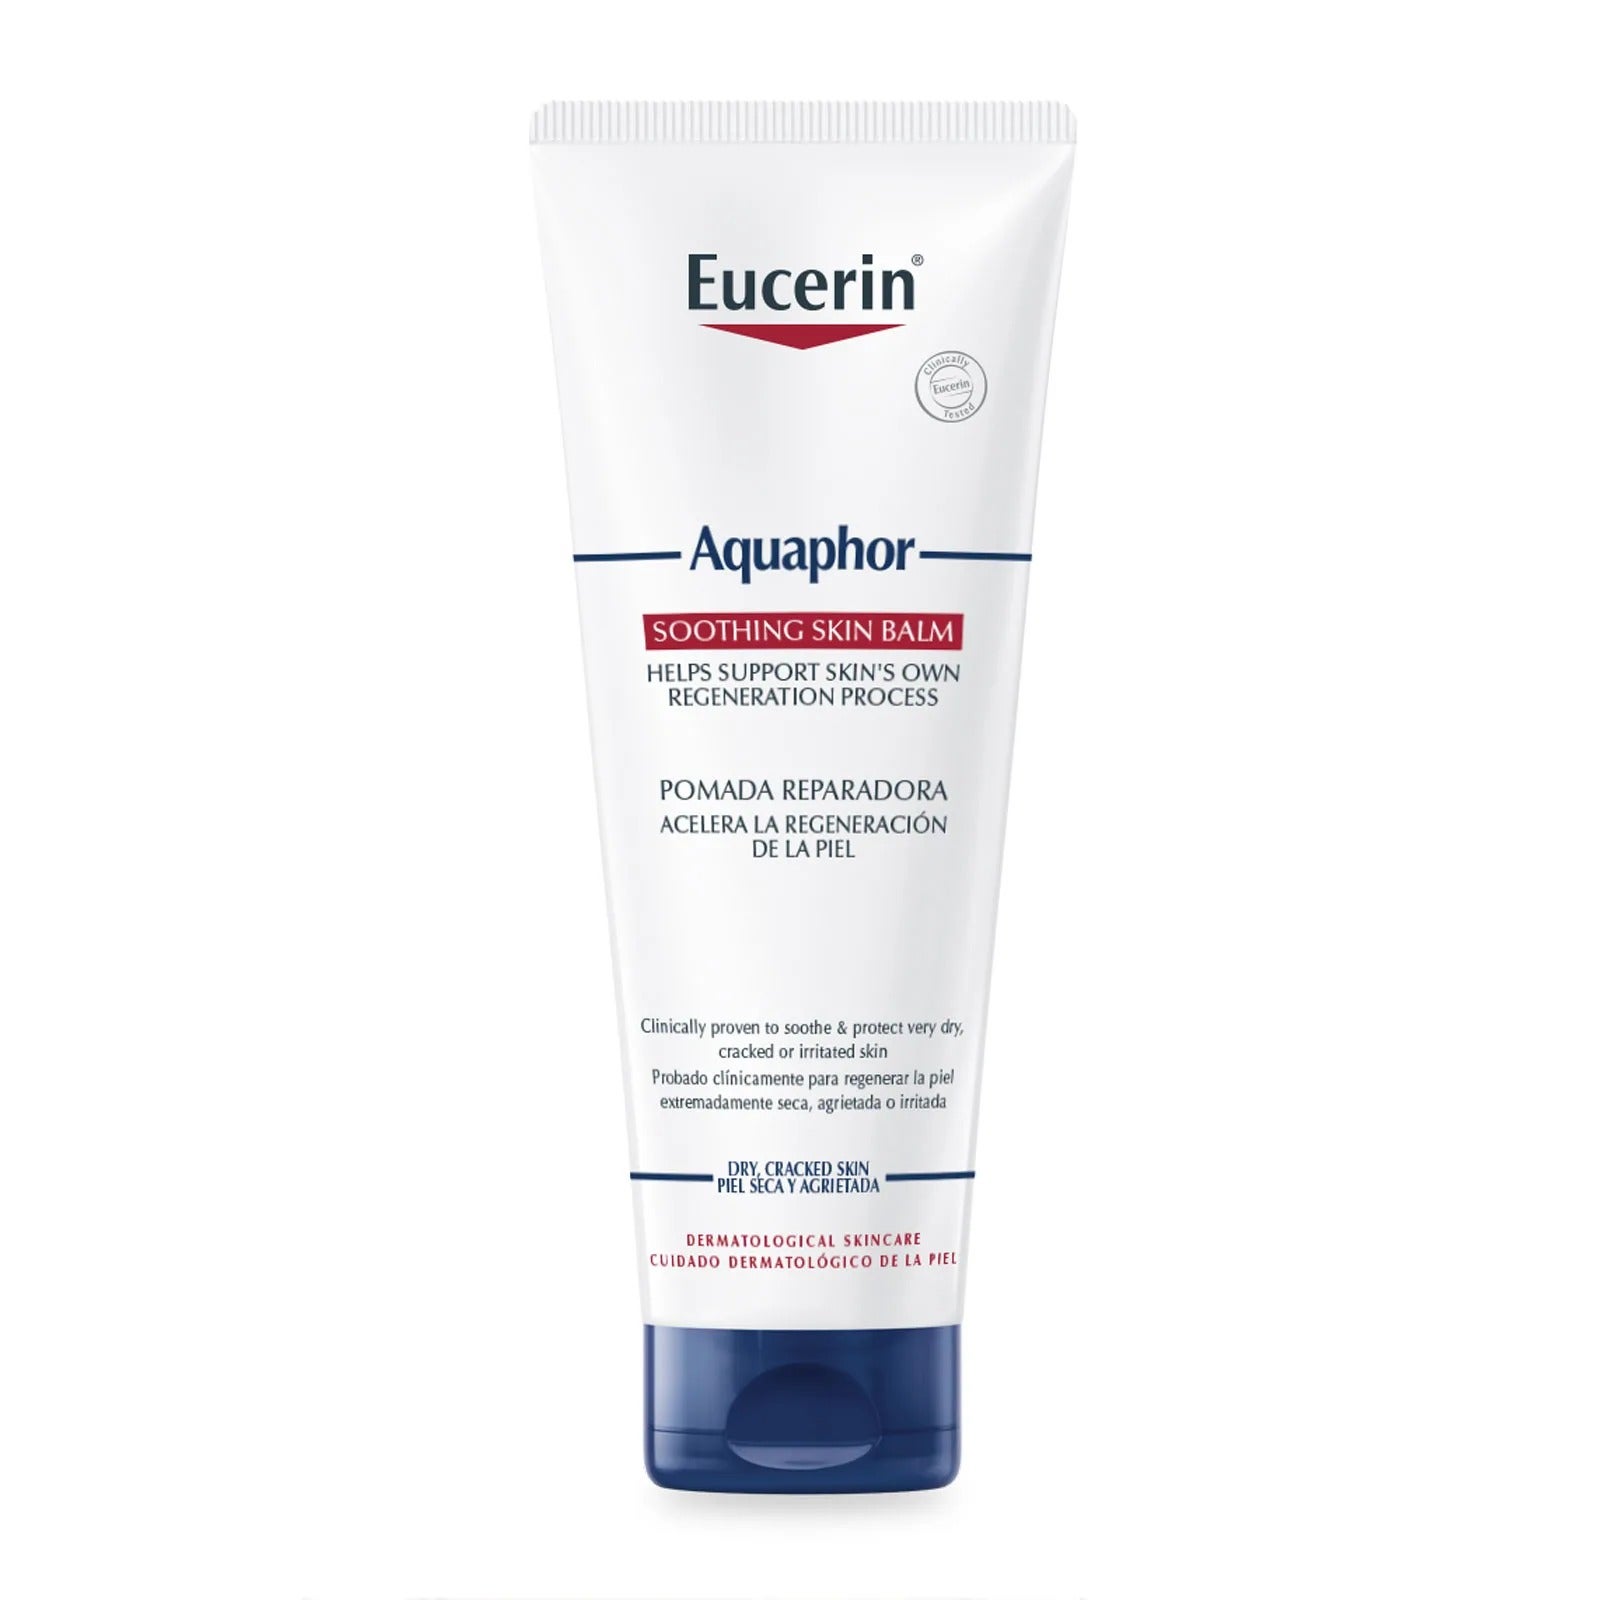 Eucerin + Eucerin Aquaphor Soothing Skin Balm